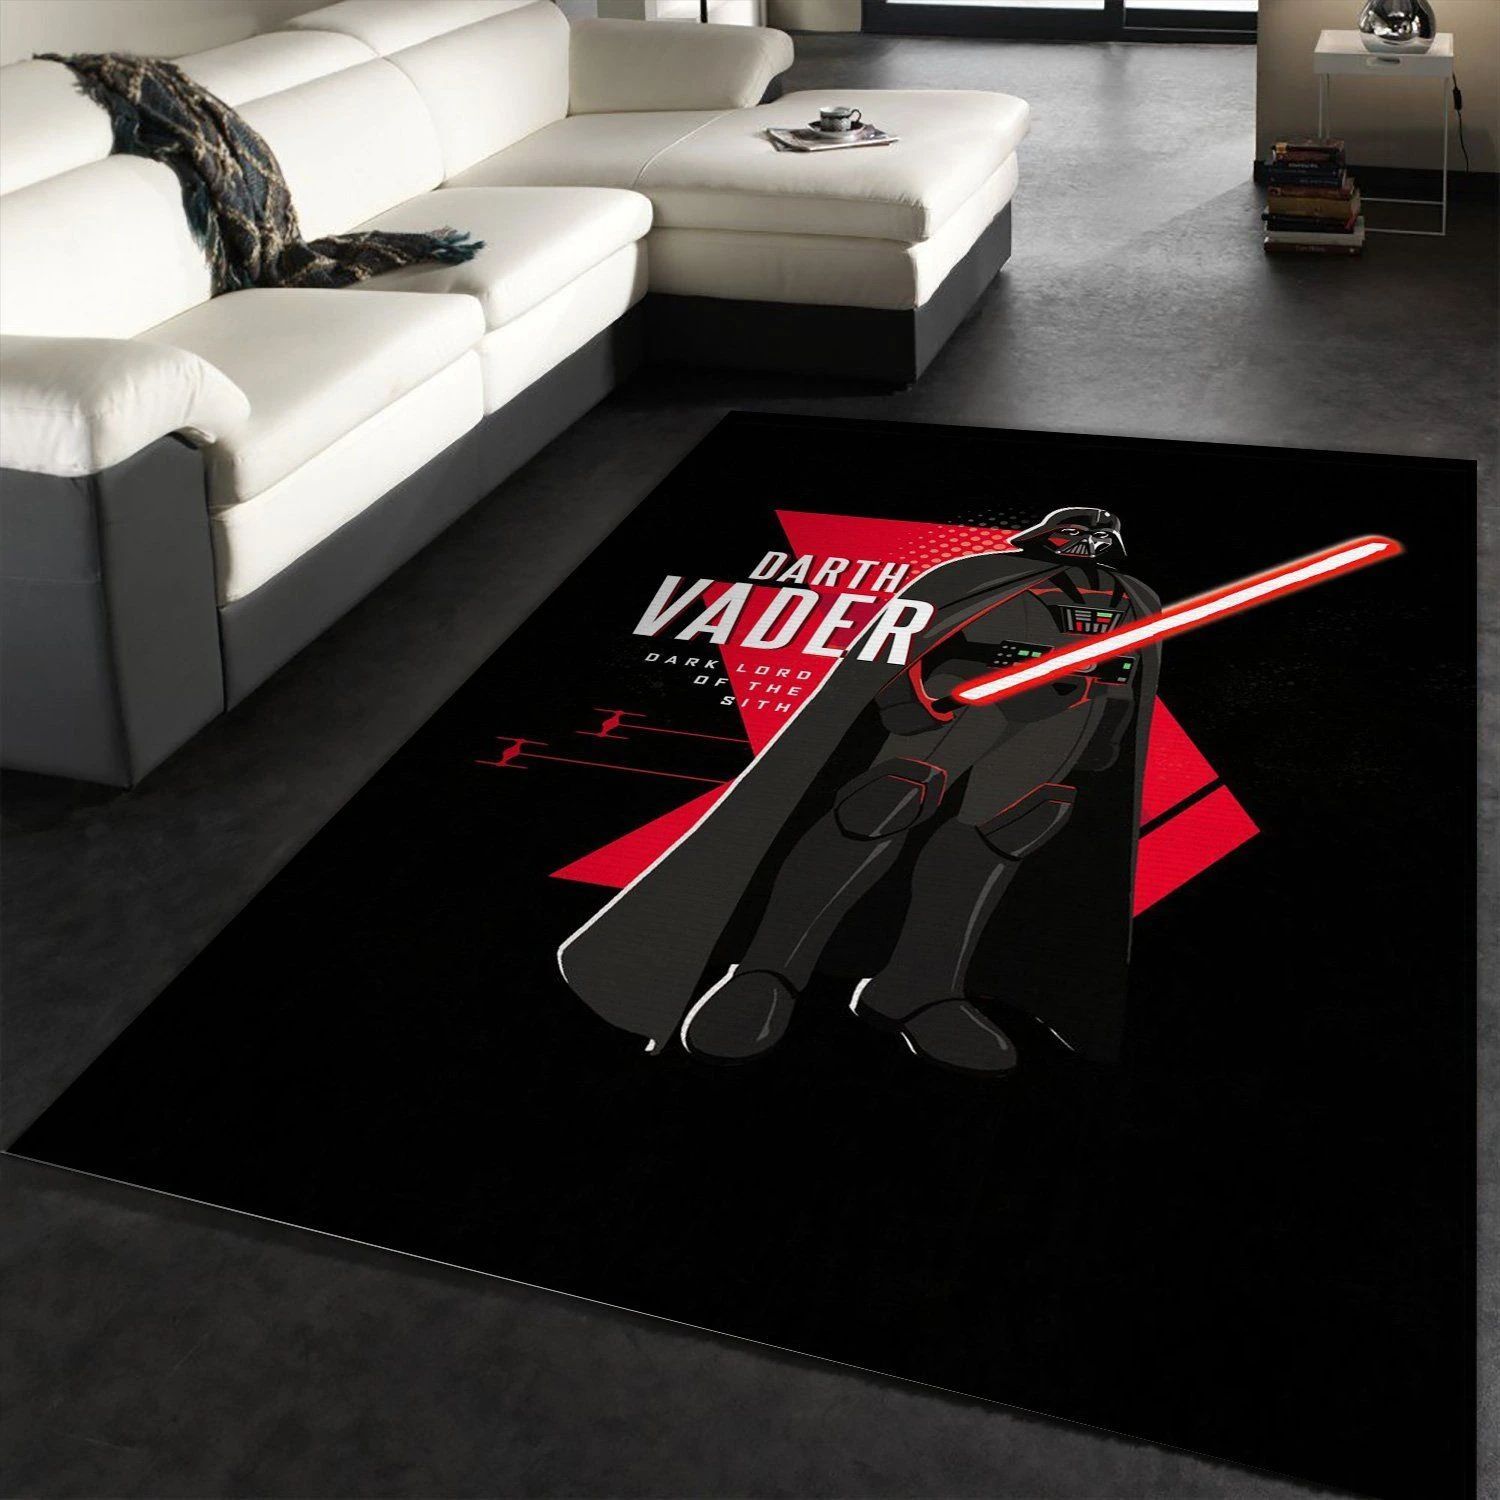 Vader Rug Star Wars Galaxy Of Adventures Home US Decor - Indoor Outdoor Rugs 1